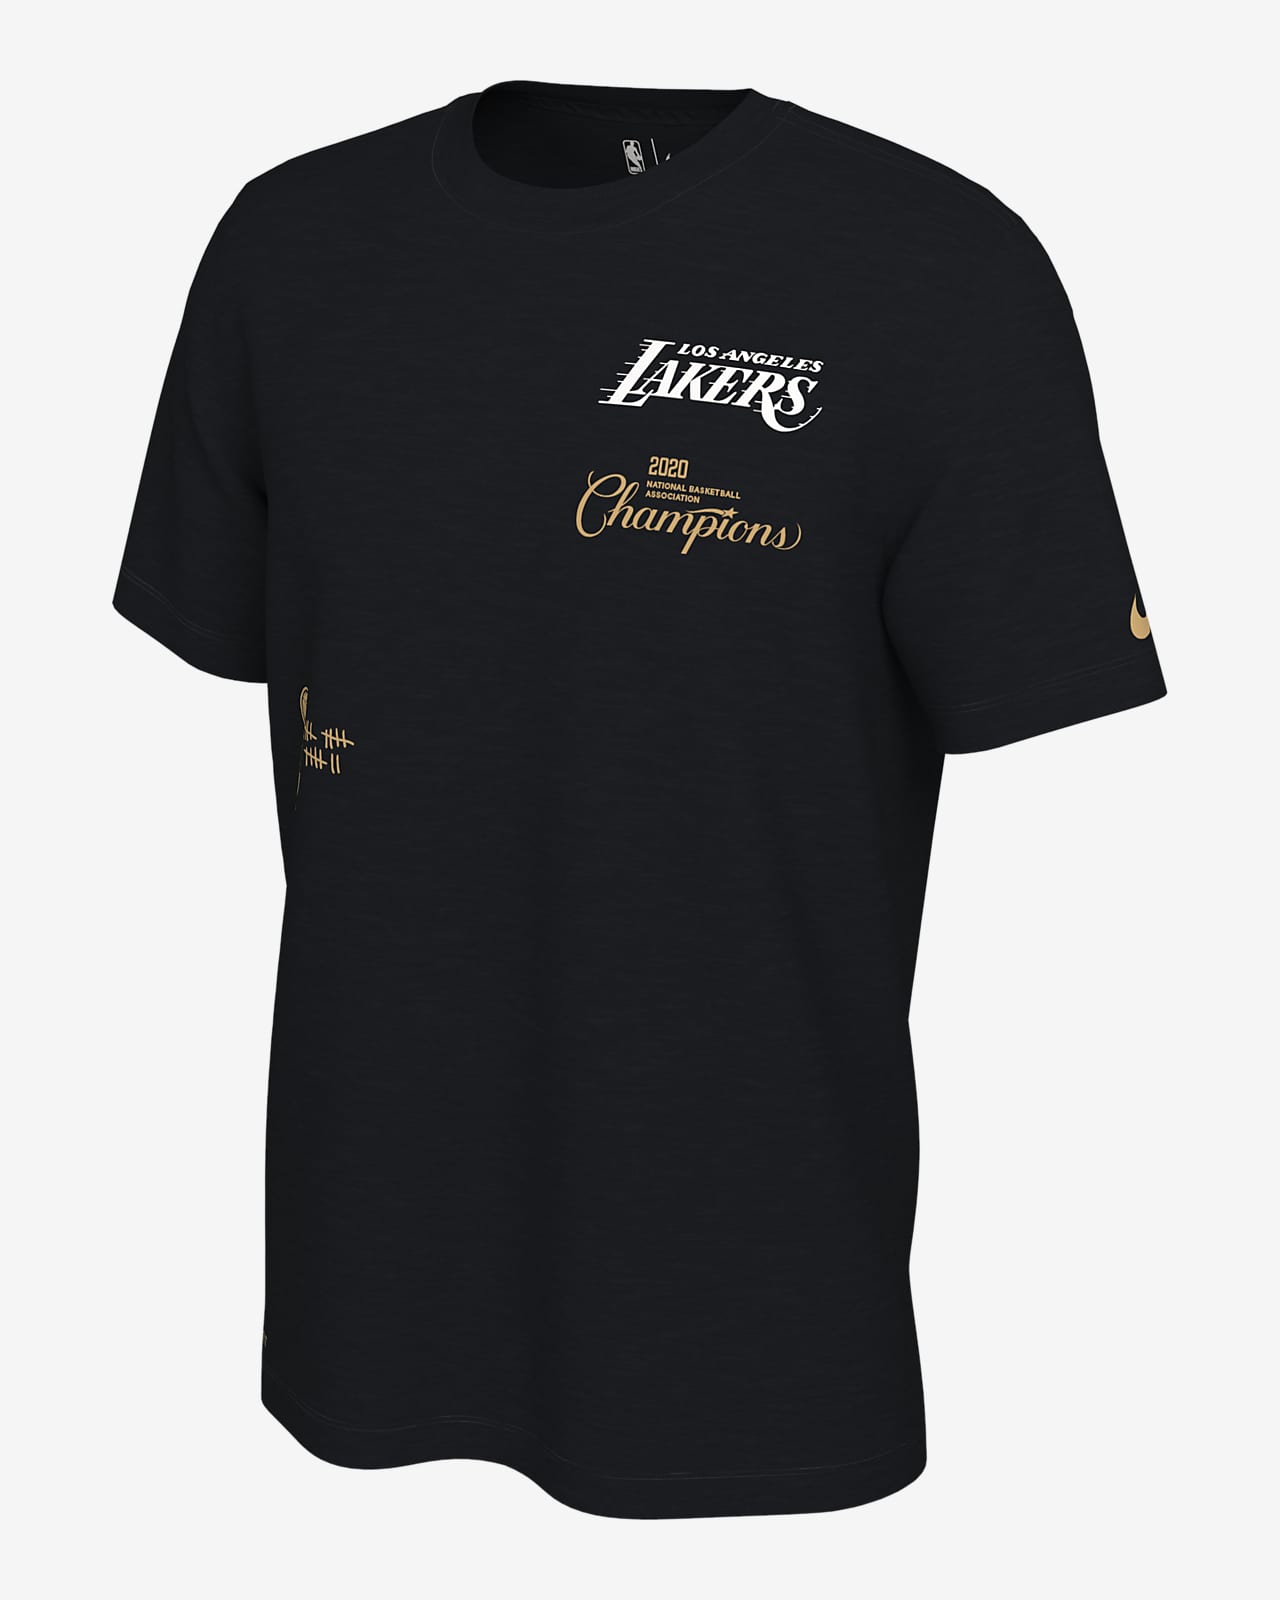 lakers basketball shirt